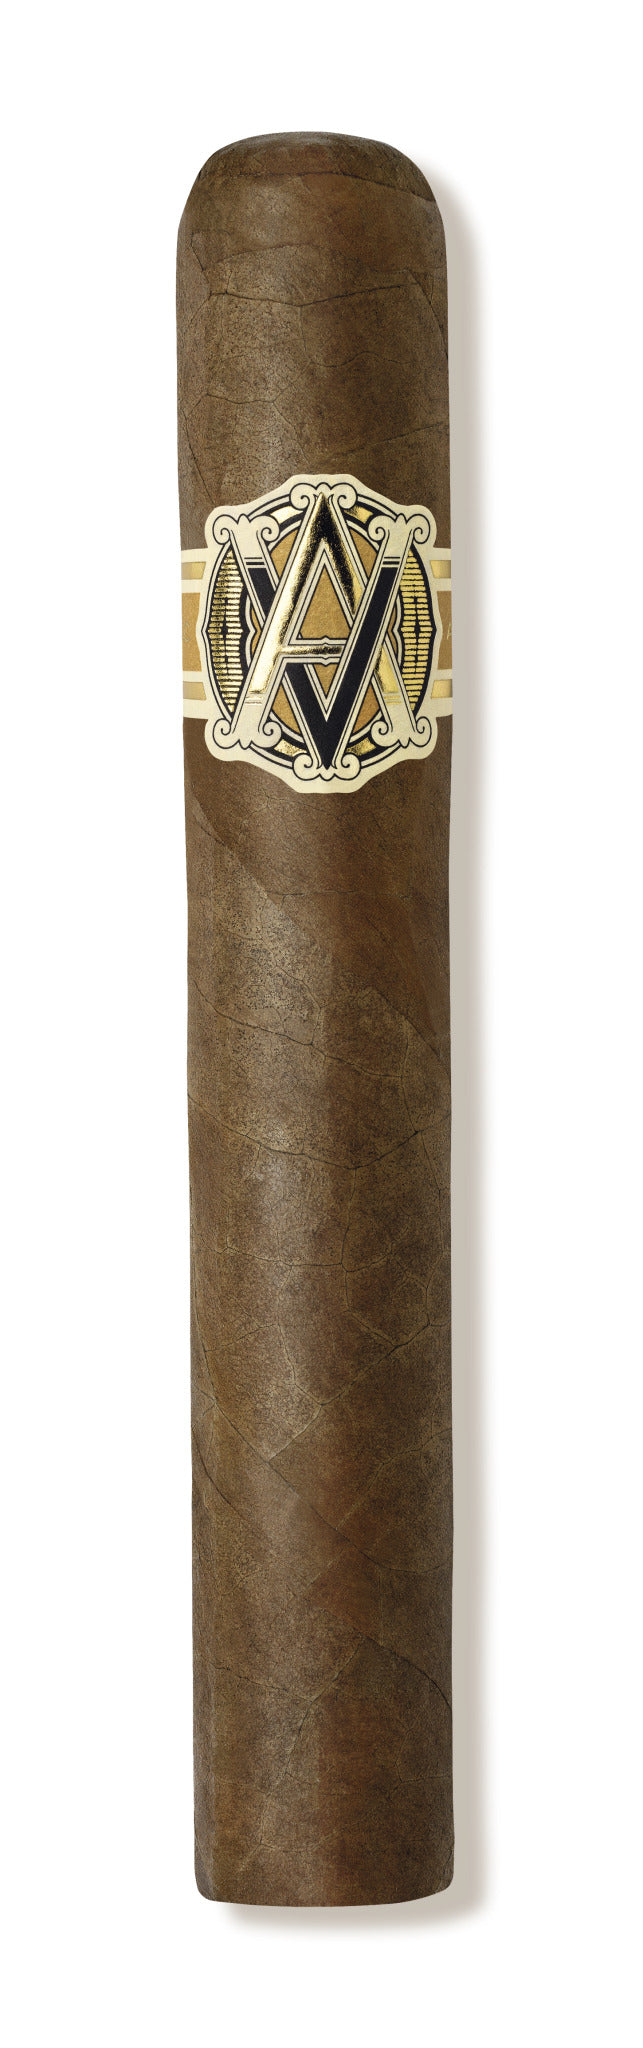 Avo Cigars Classic No.6-0